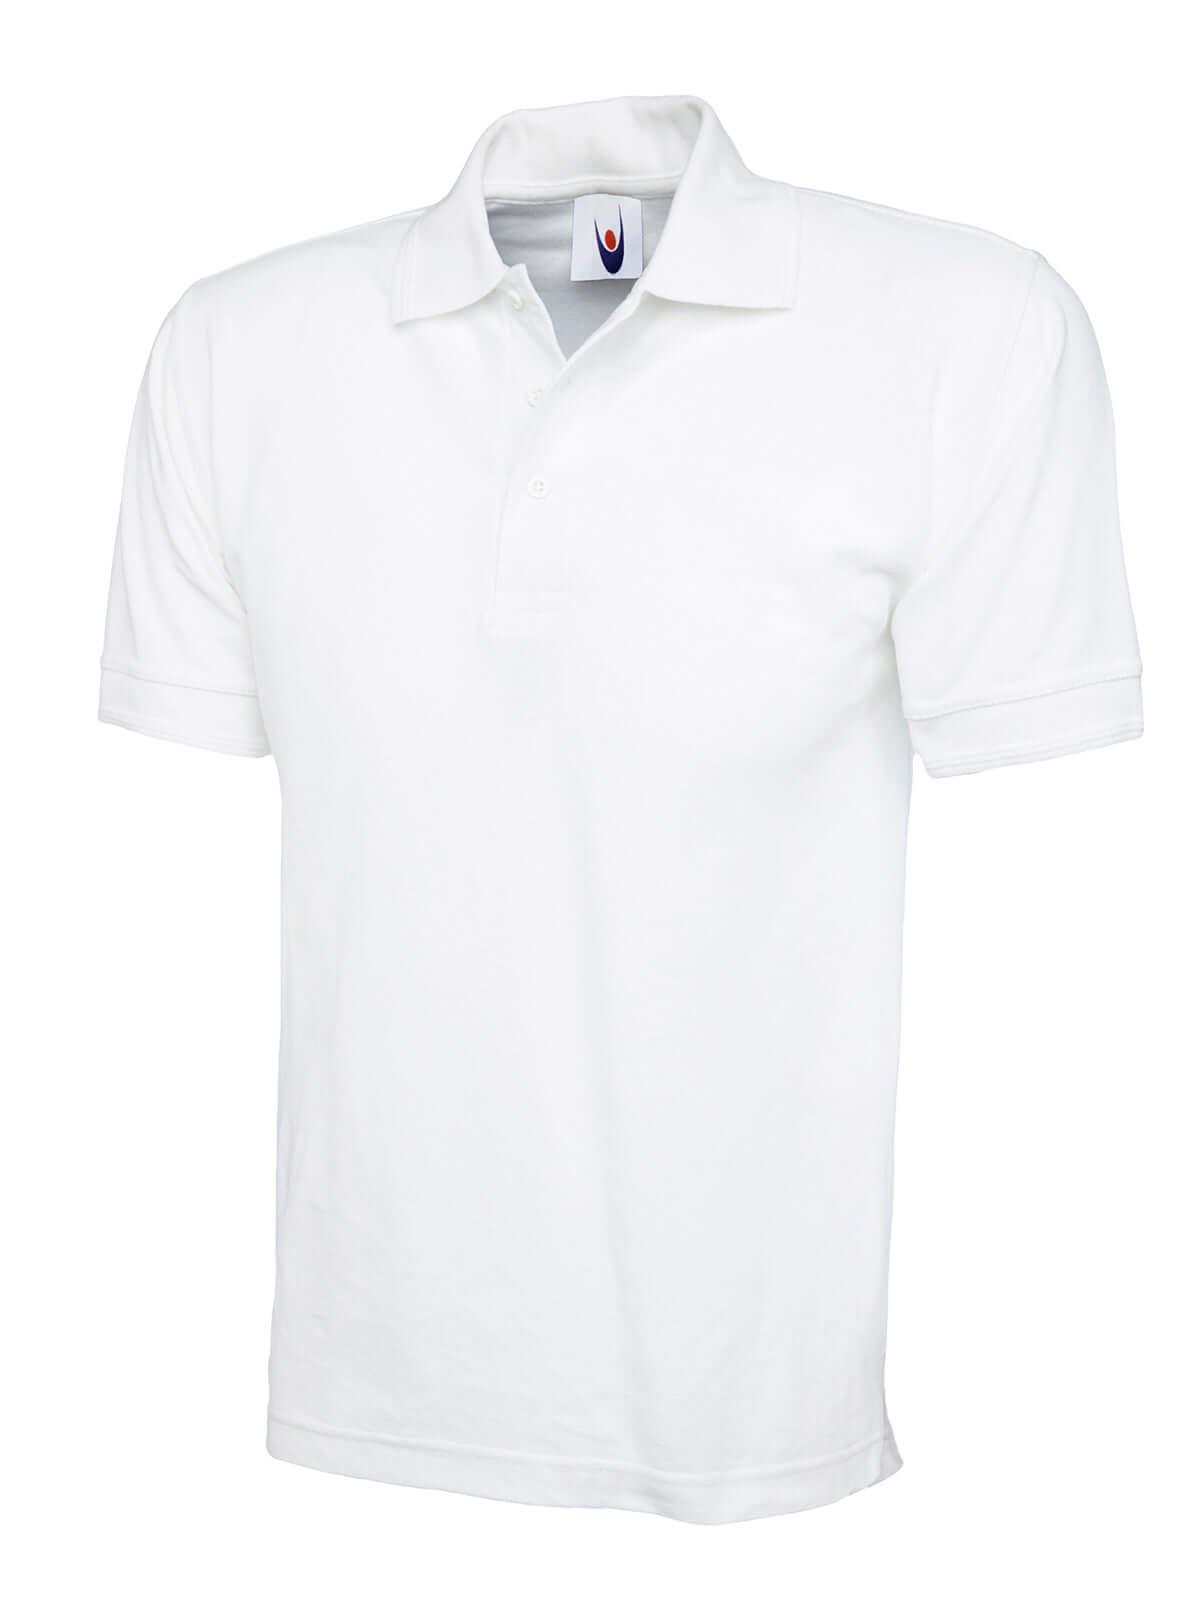 Pegasus Uniform Premium Unisex Polo Shirt - White